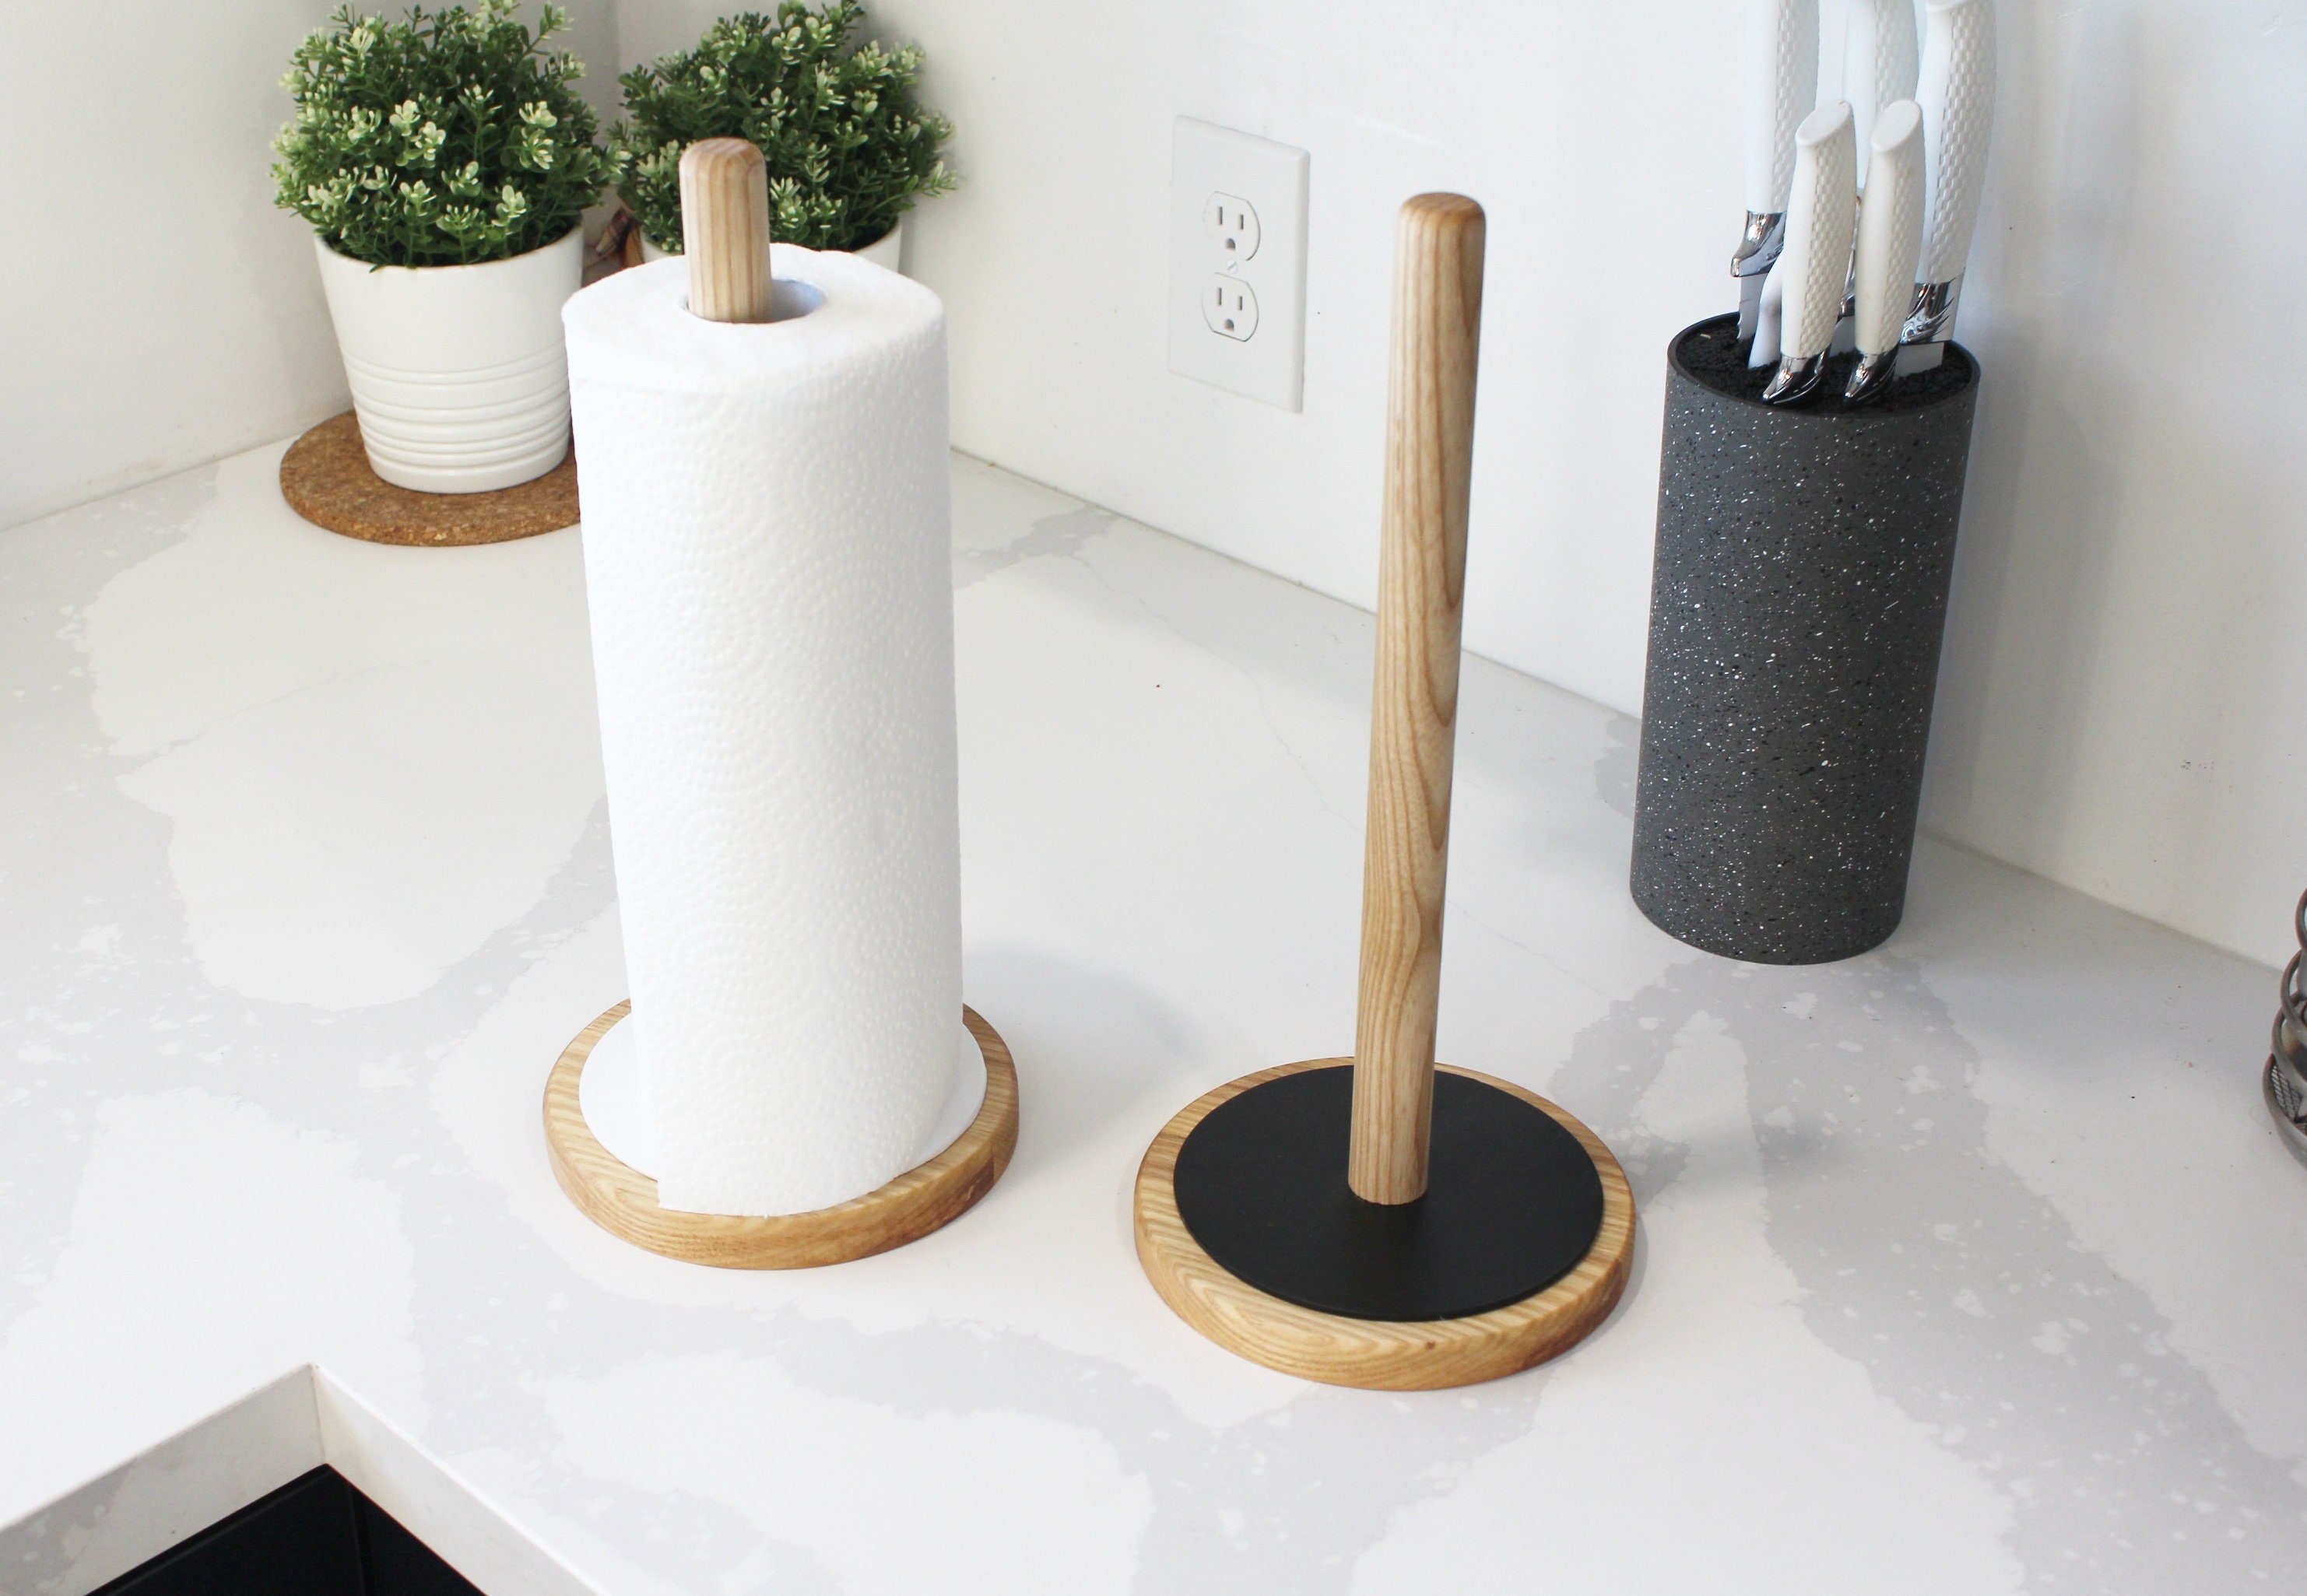 Cute Beech Roll Paper Towel Holder Free Standing Flower-shaped Countertop